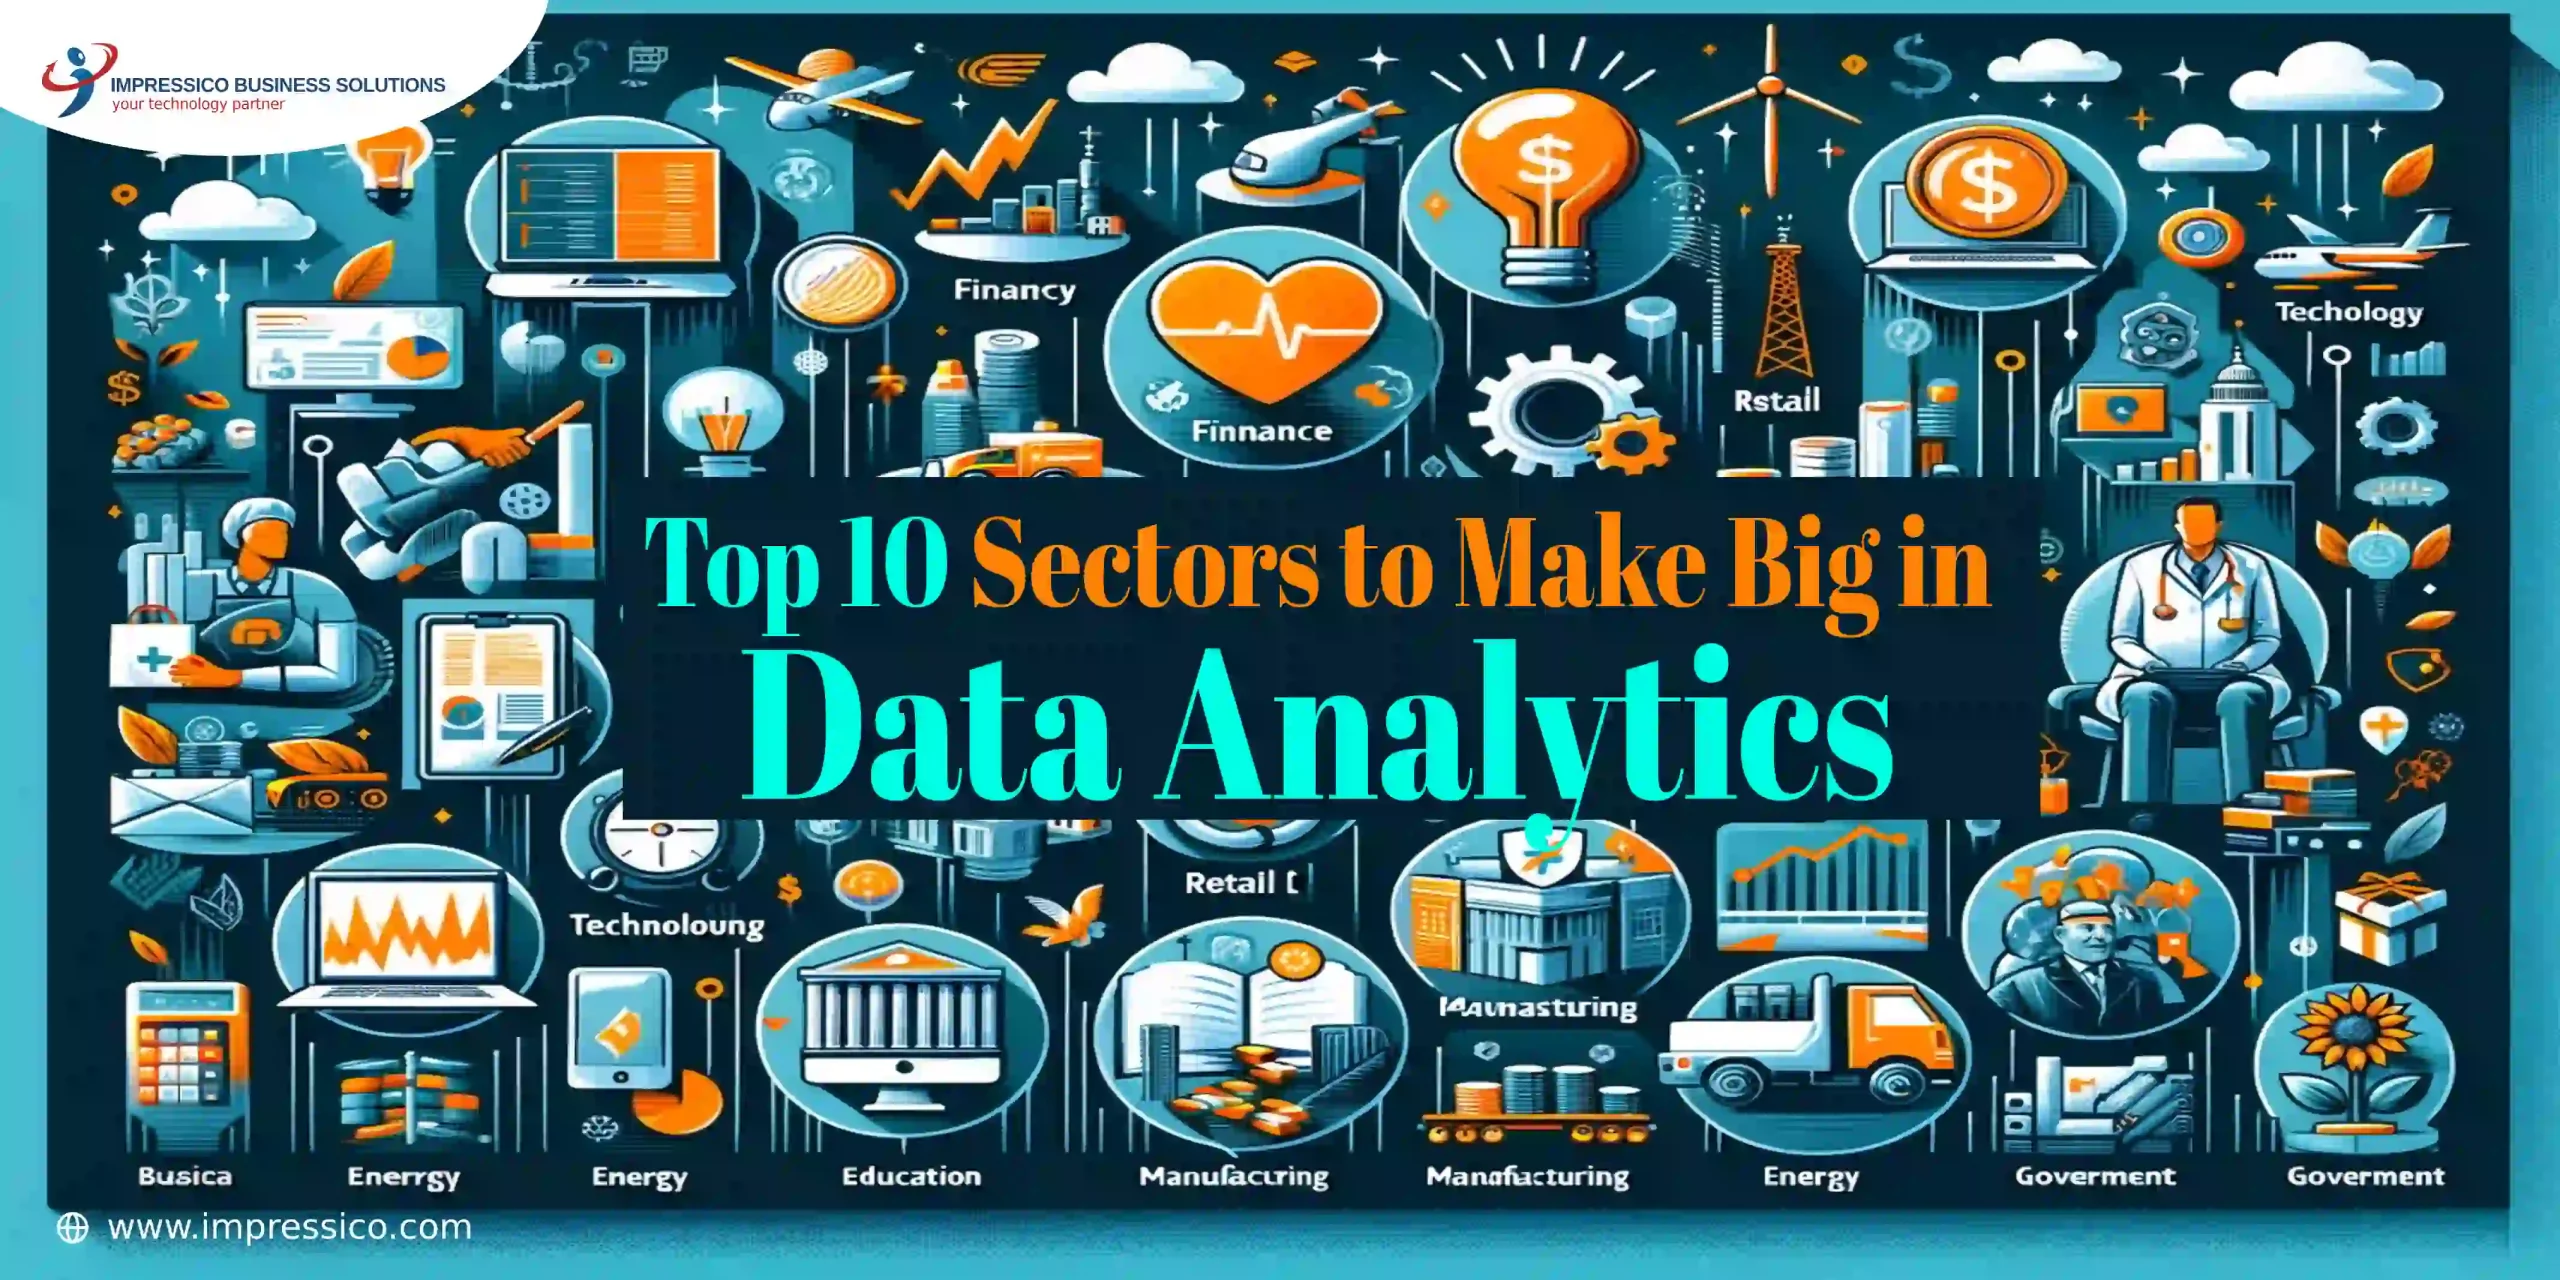 Top 10 Sectors to Make Big in Data Analytics